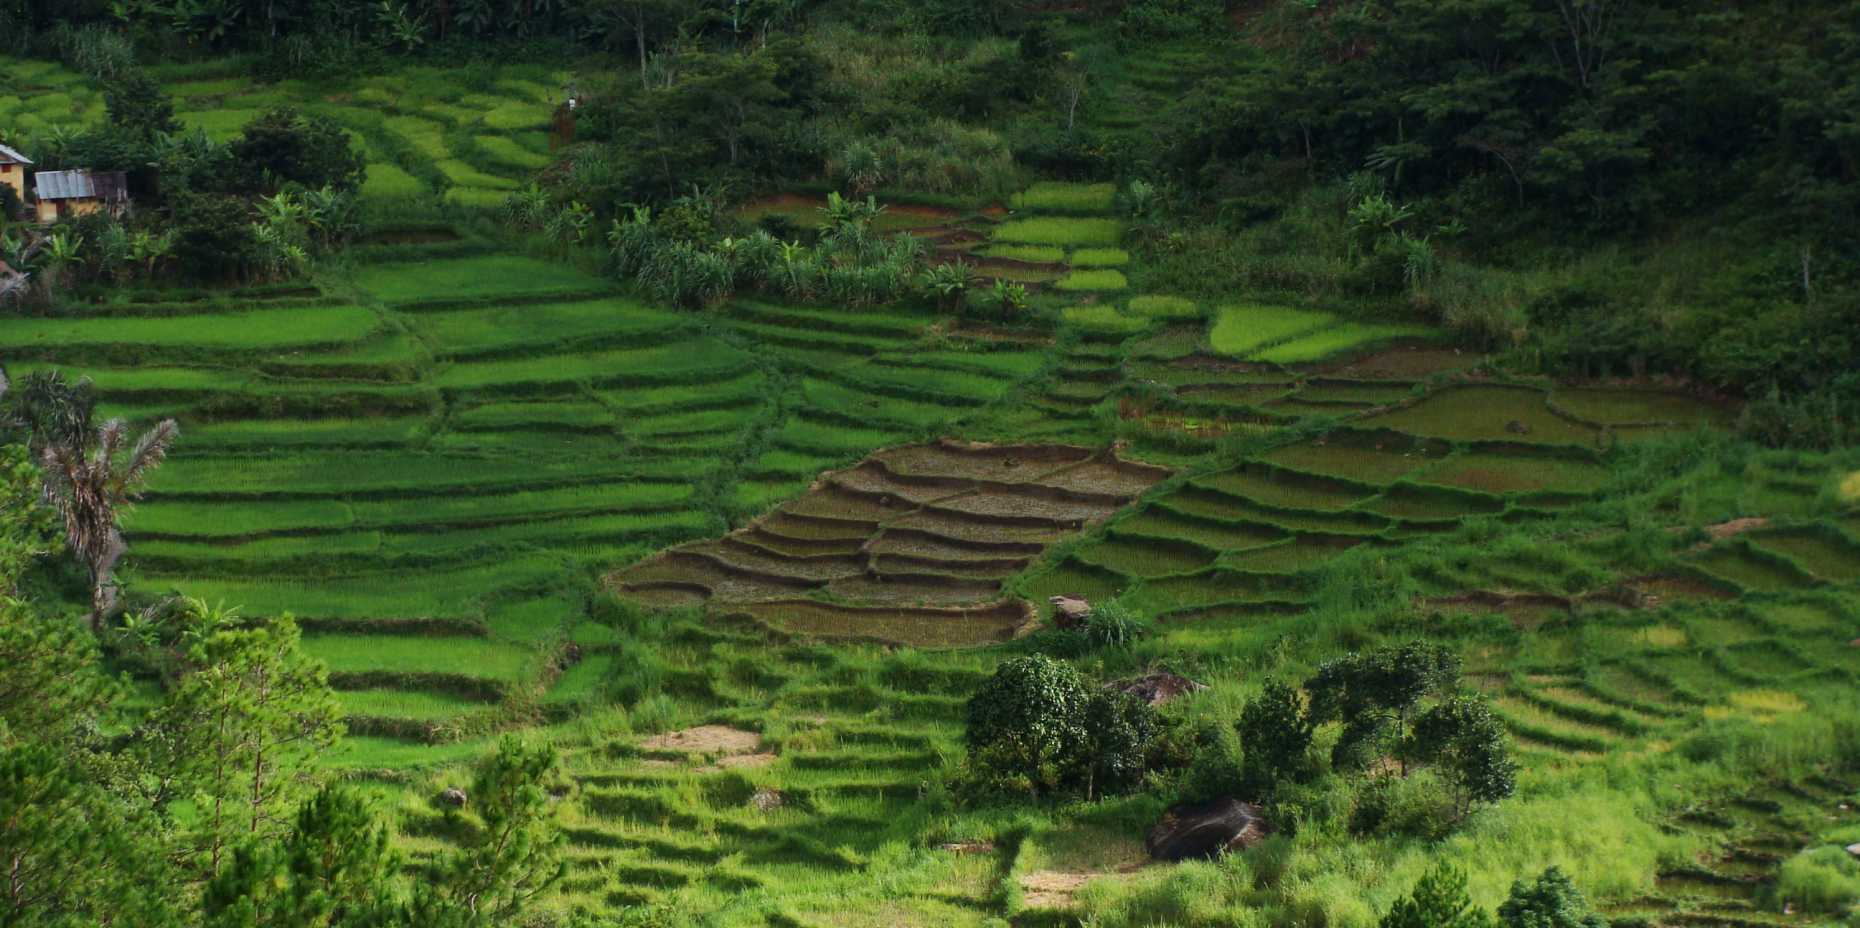 Vergr?sserte Ansicht: small-scale rice farming in Madagascar